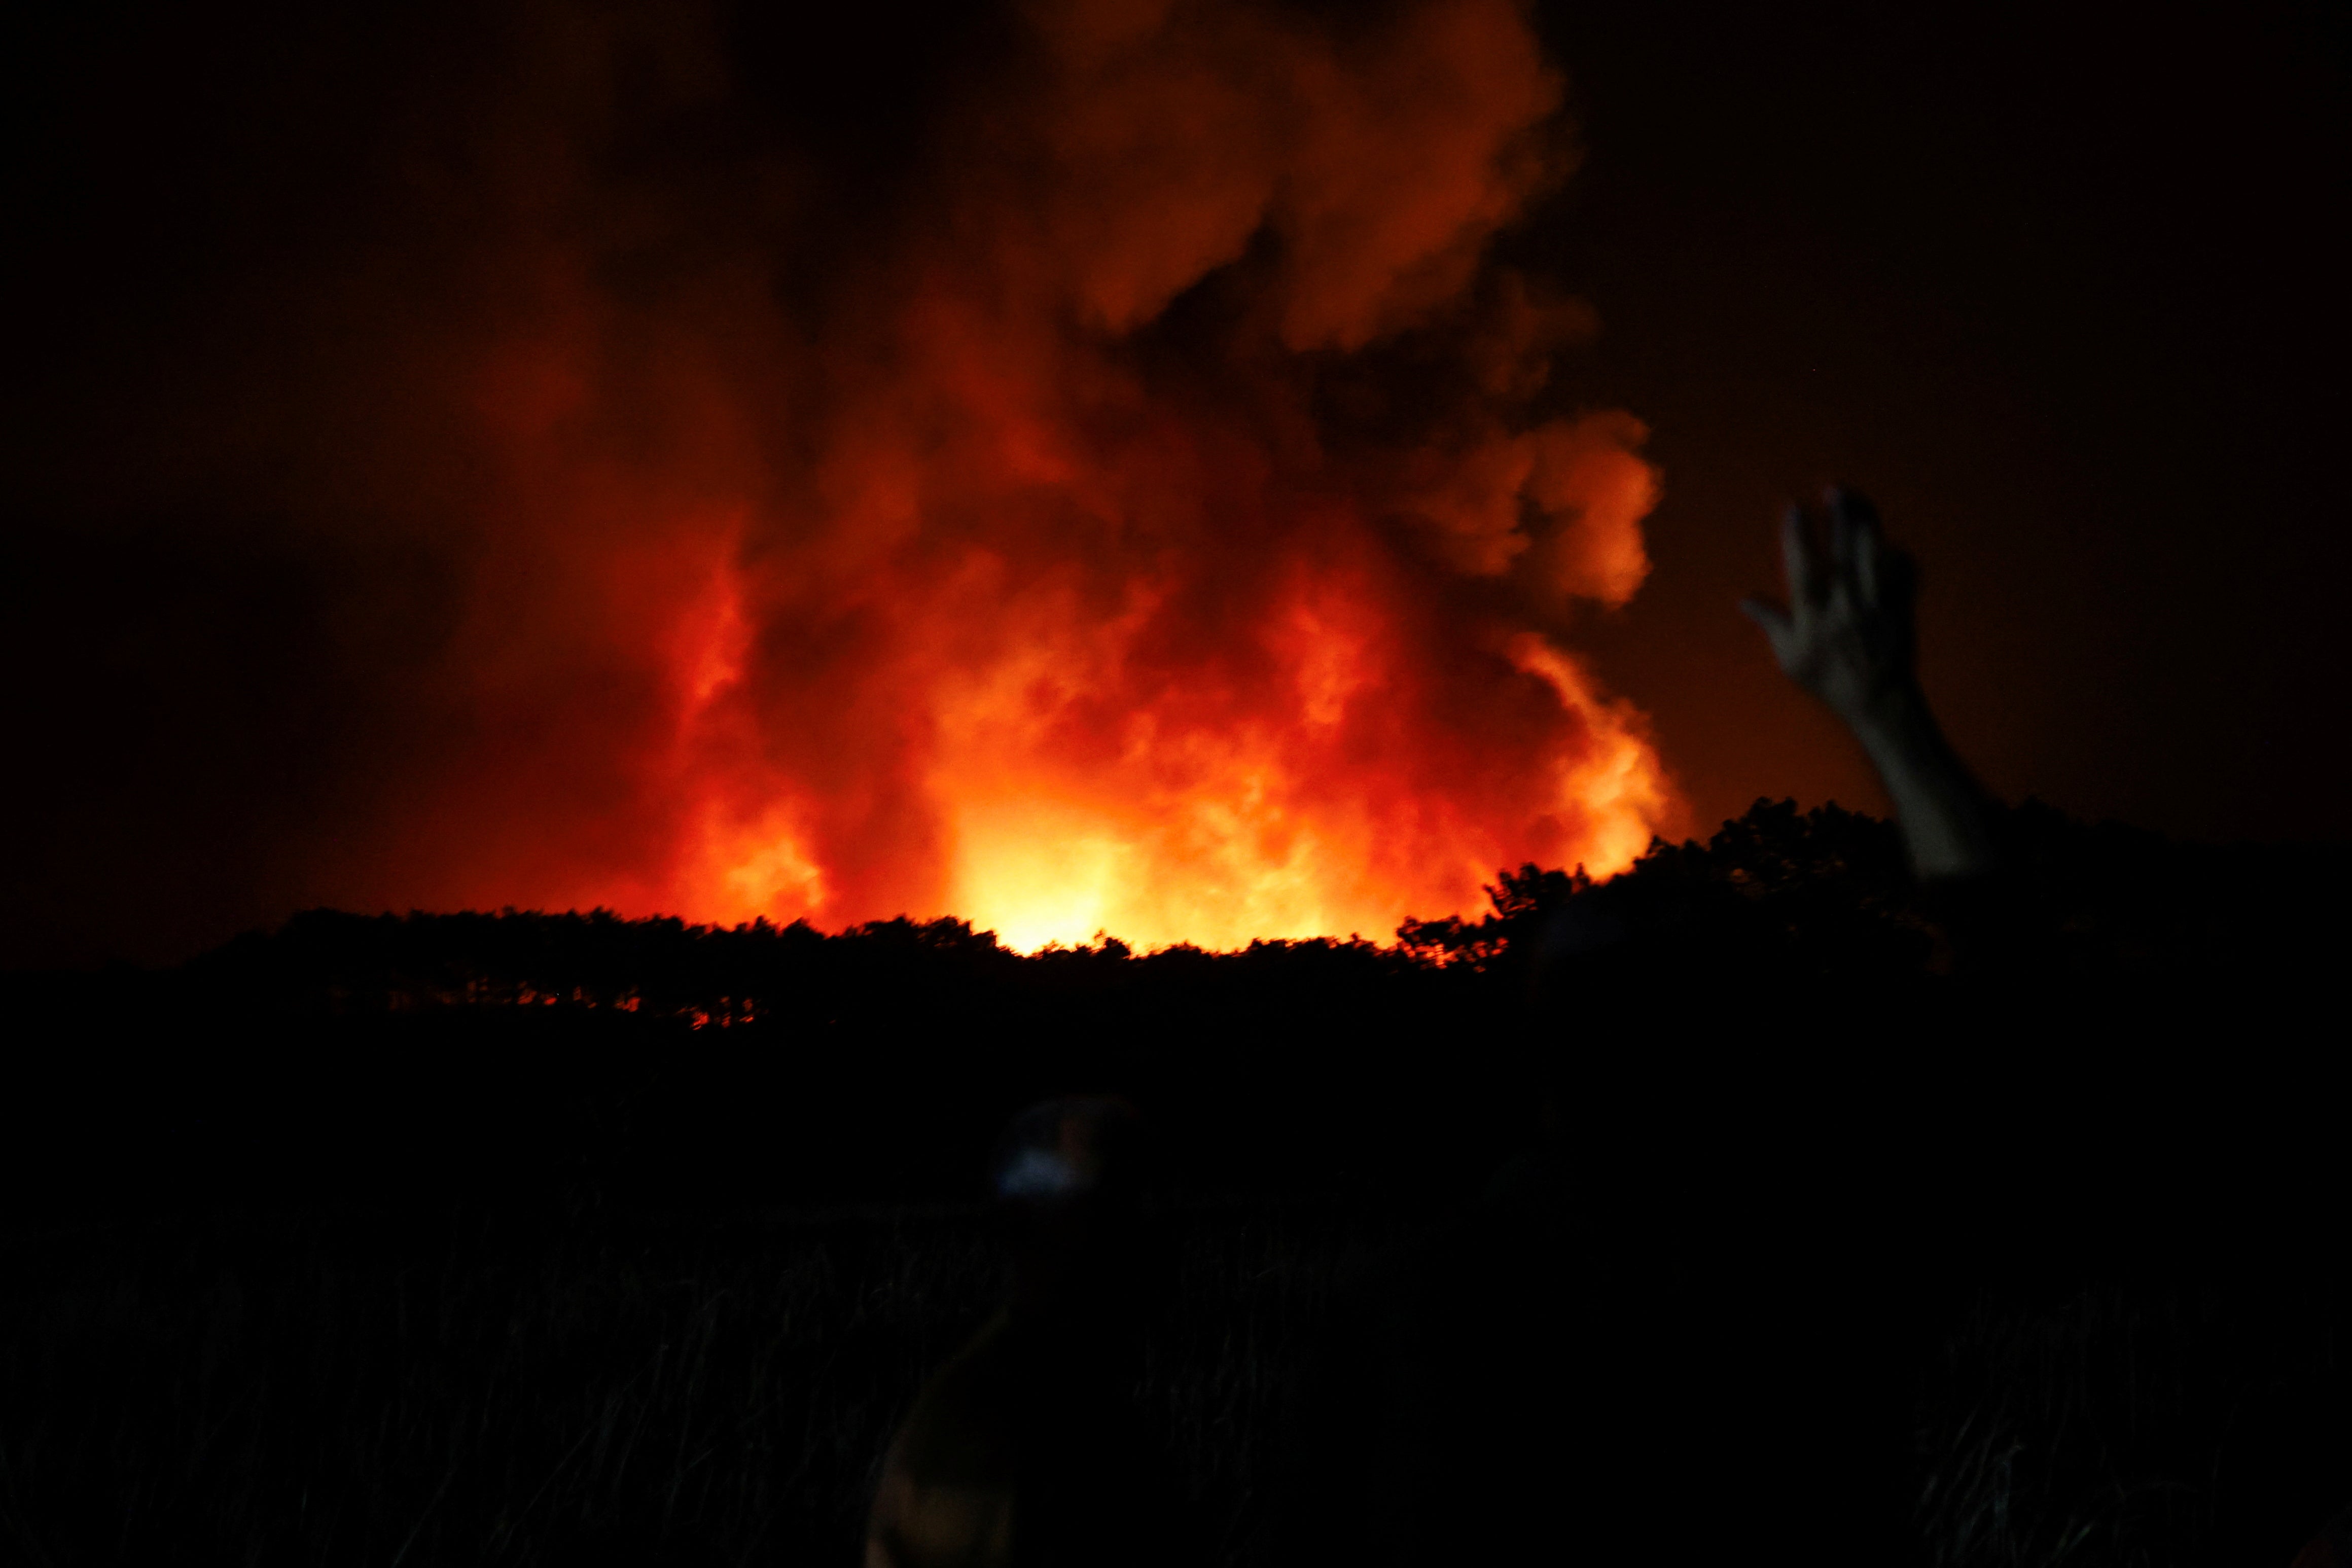 View of a wildfire in Aljesur, Portugal